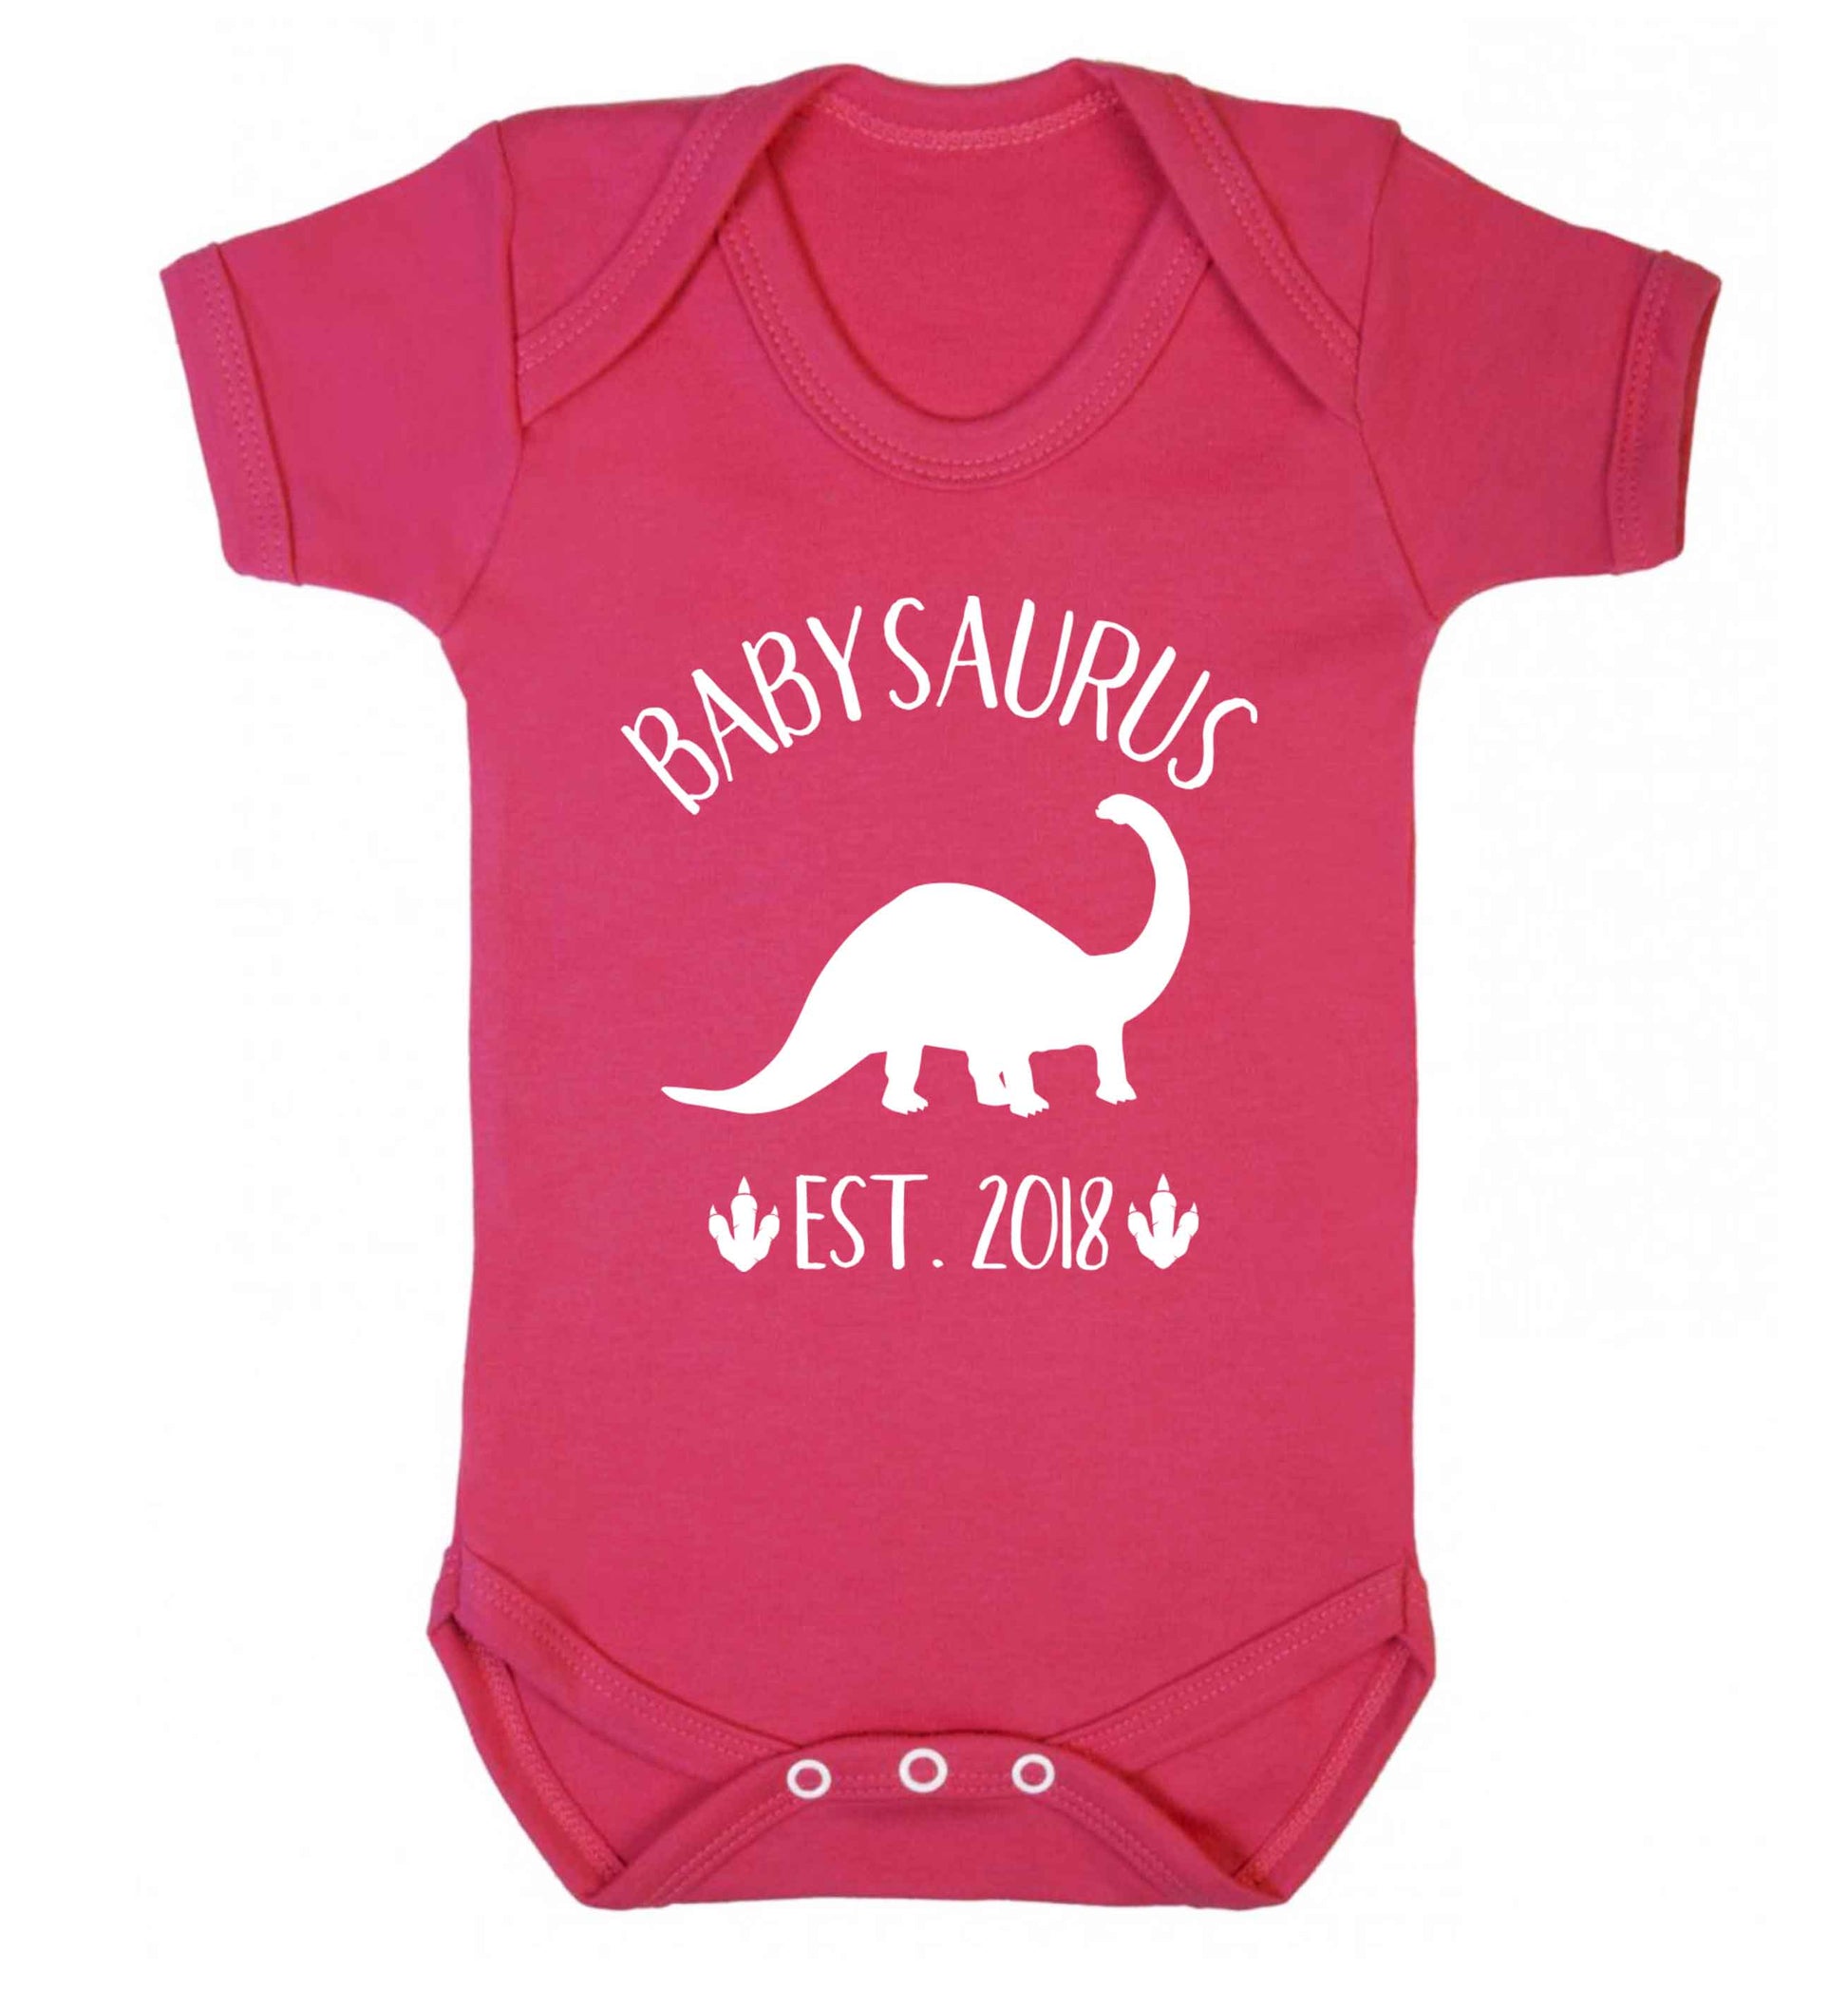 Personalised babysaurus since (custom date) Baby Vest dark pink 18-24 months